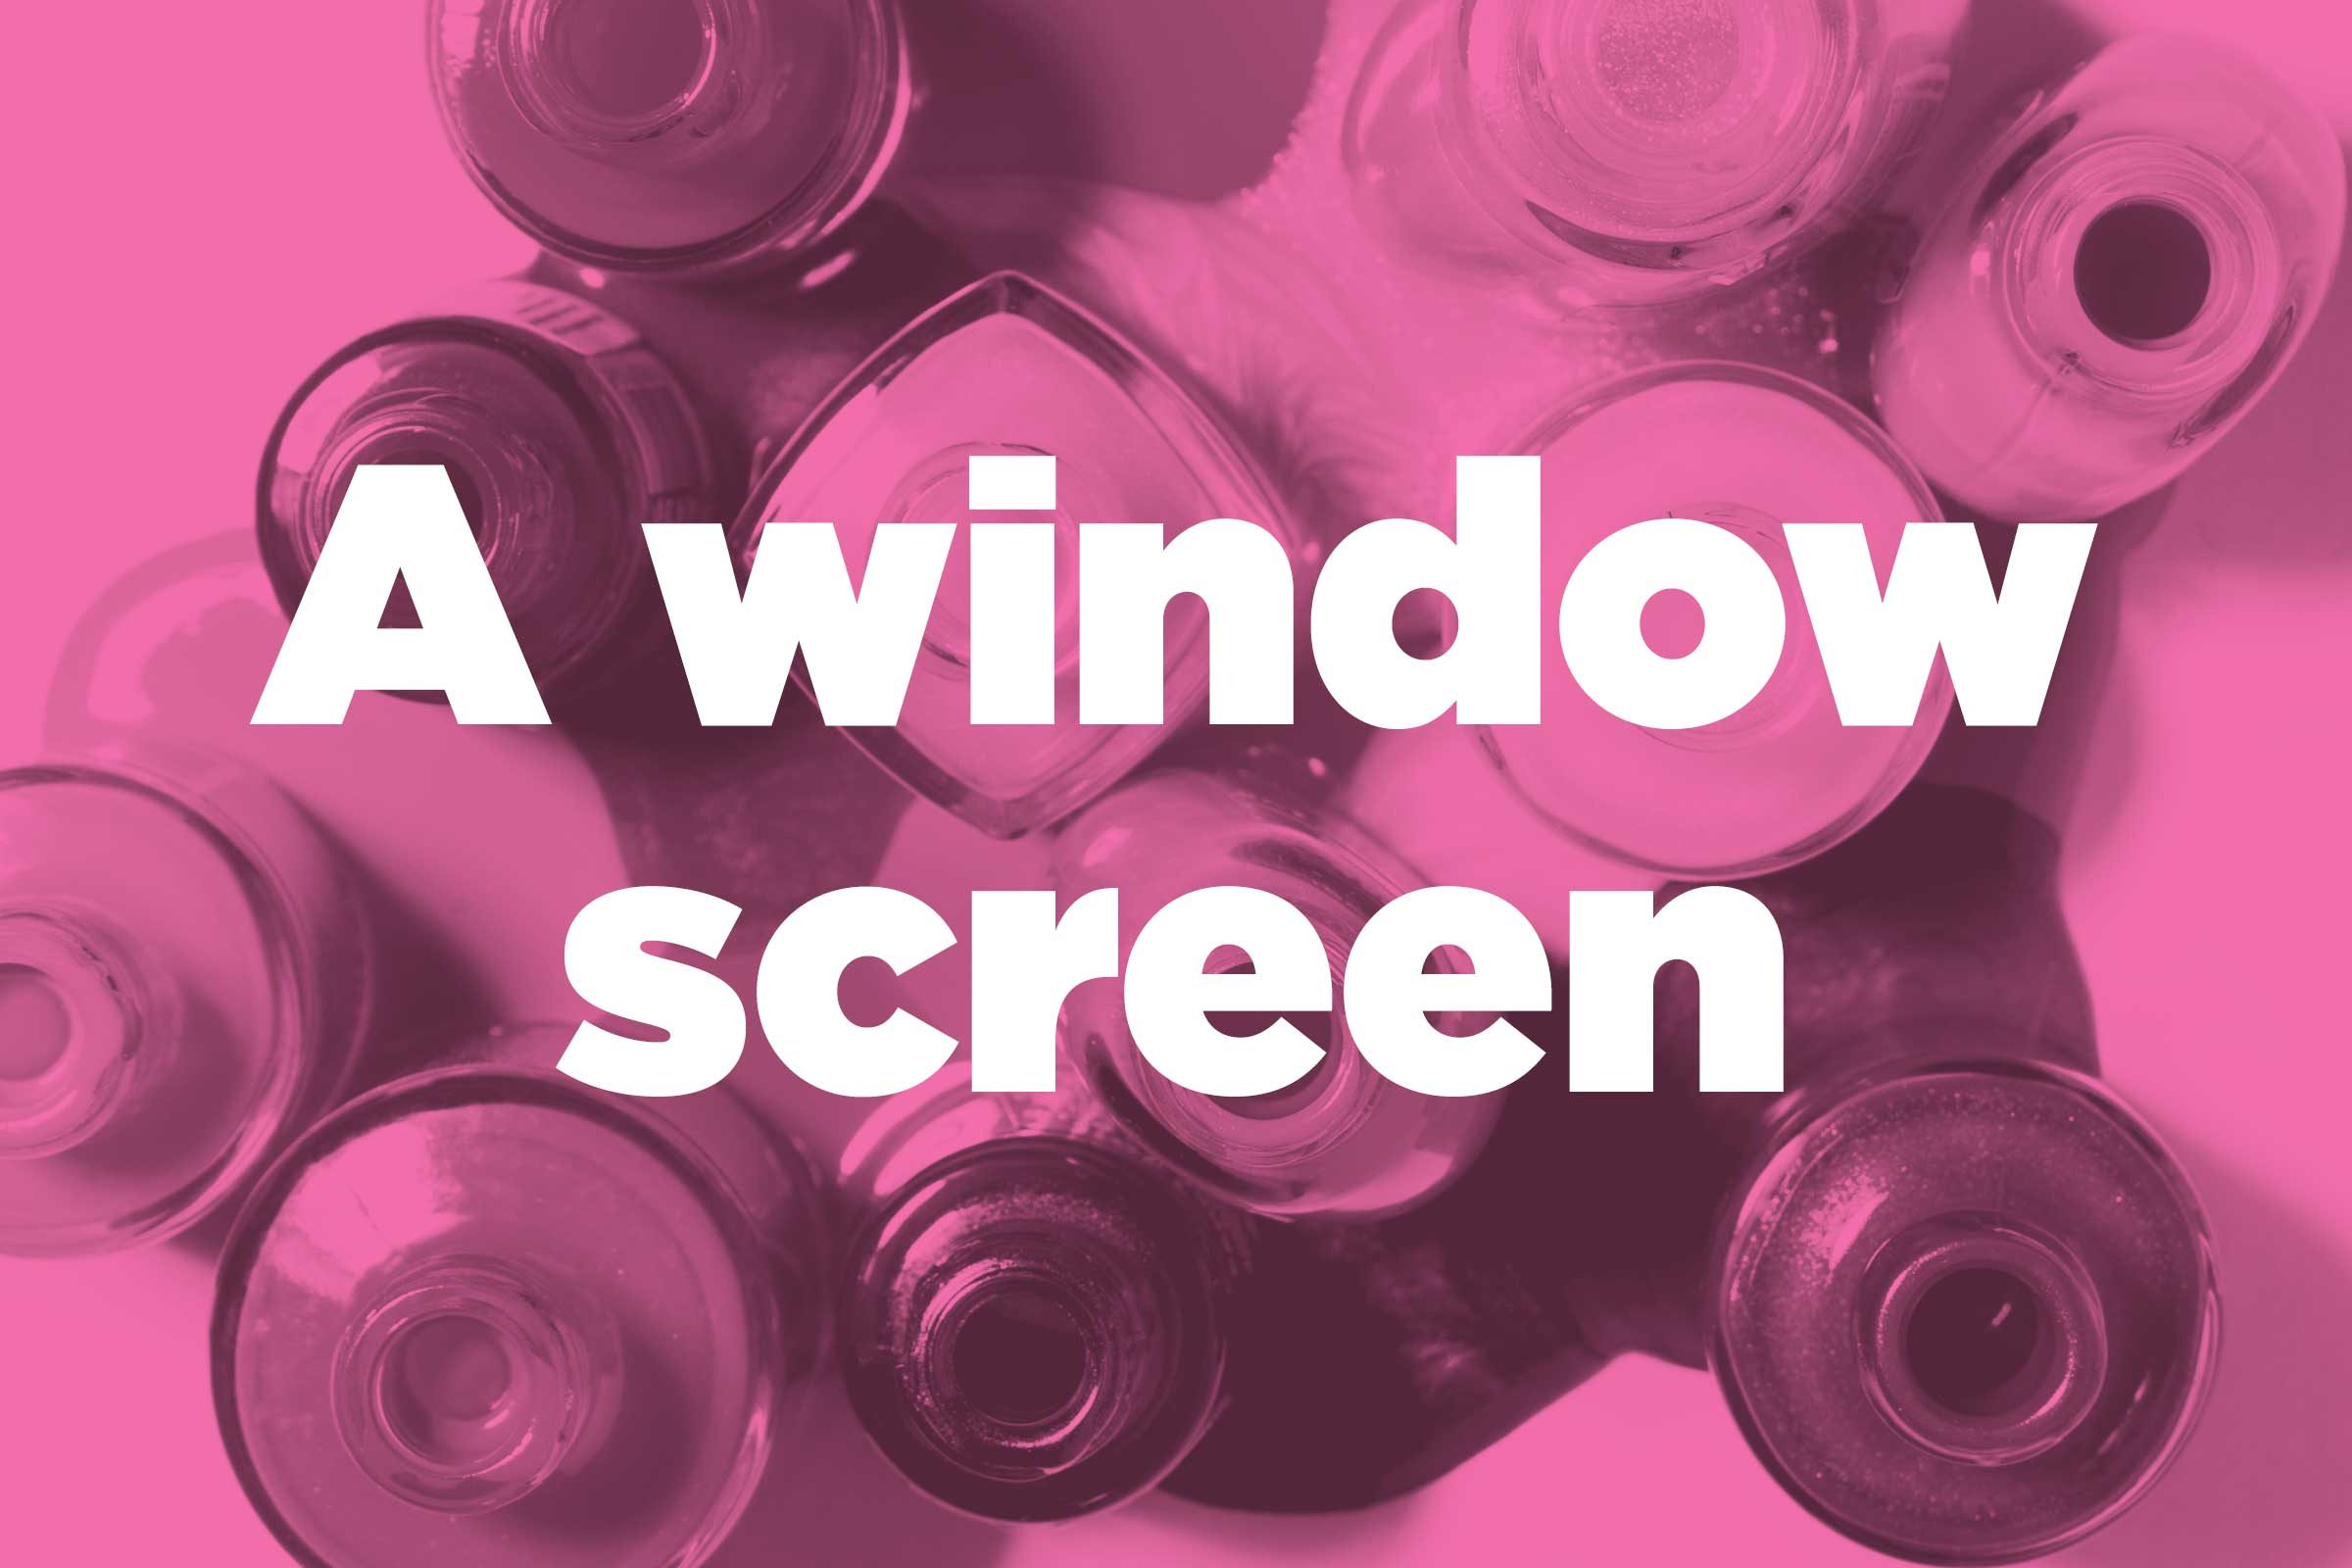 Fix a window screen